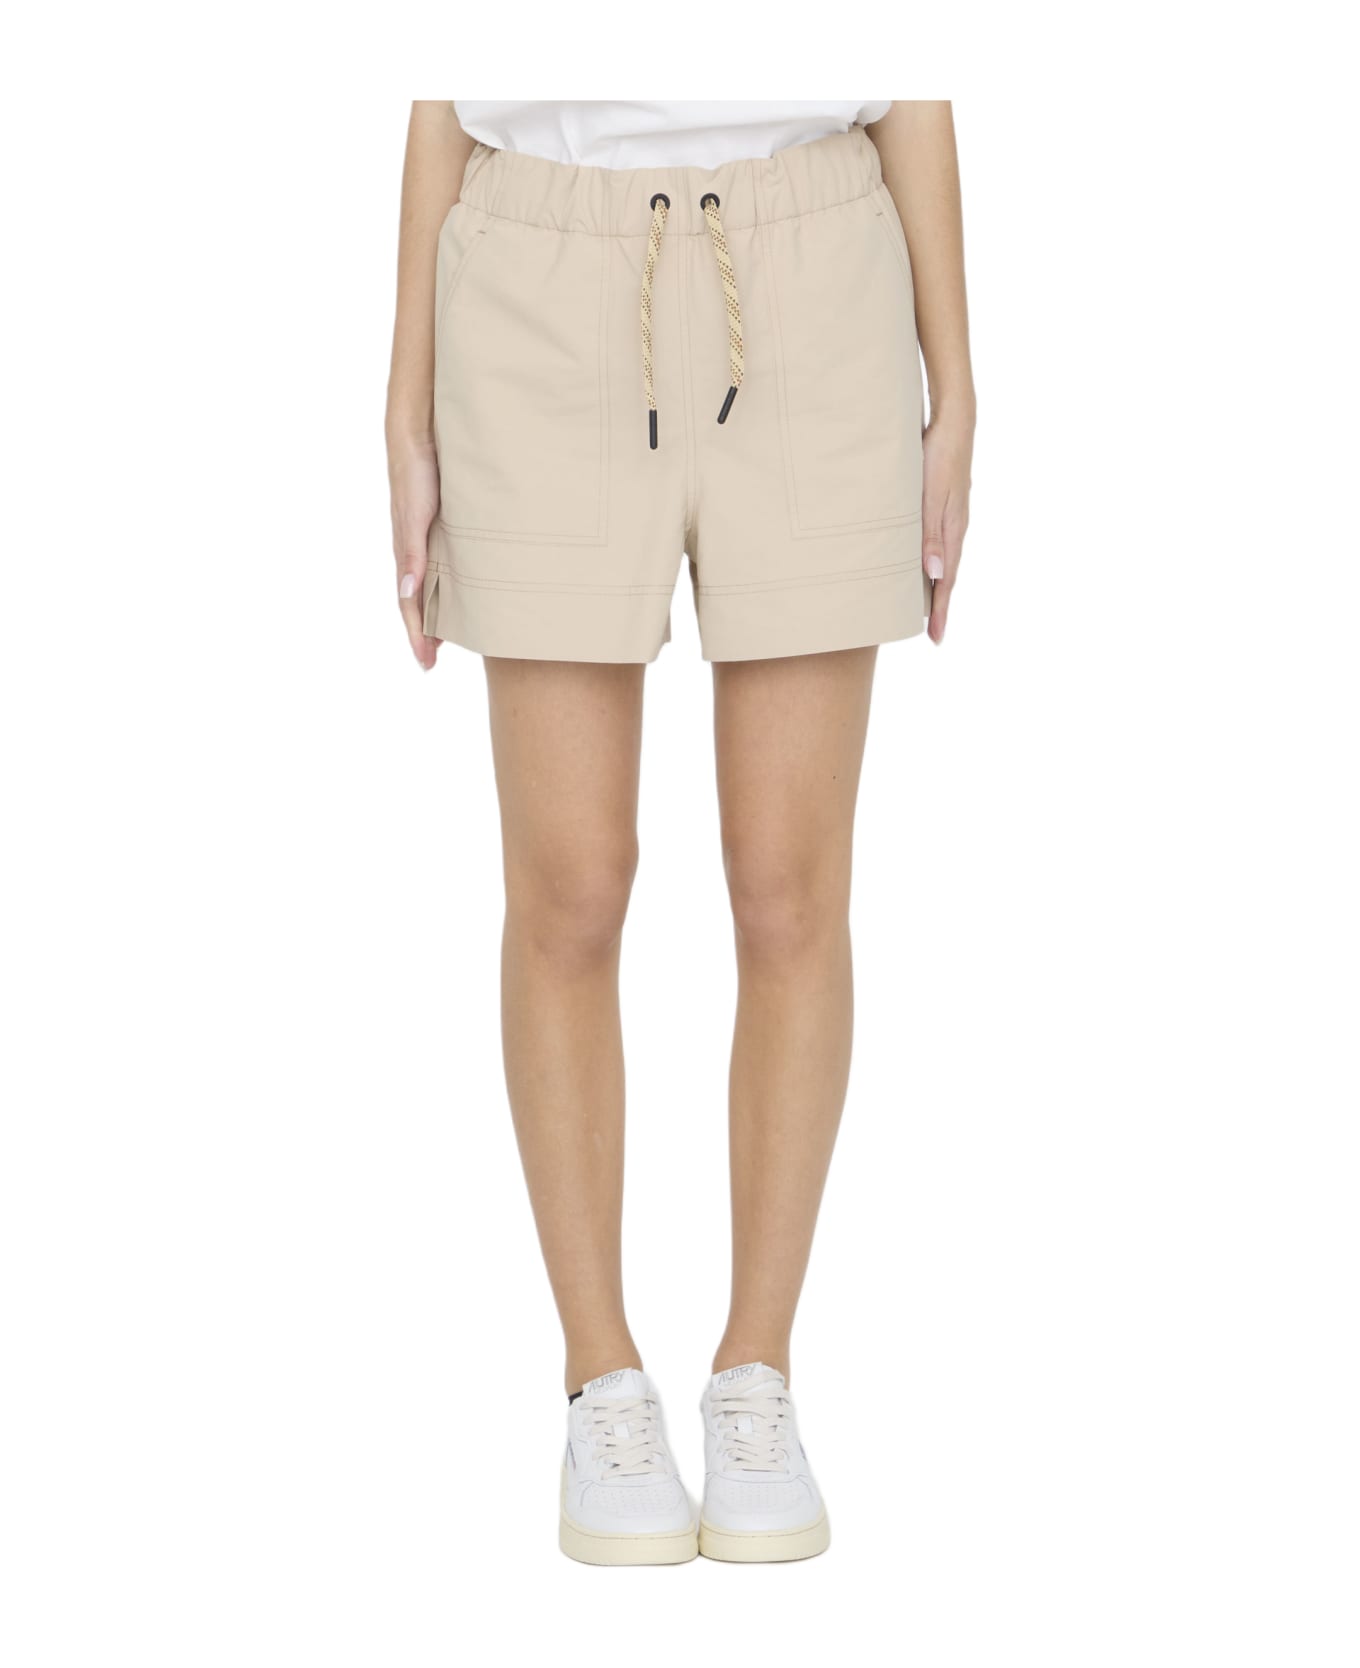 Moncler Grenoble Nylon Shorts - P ショートパンツ